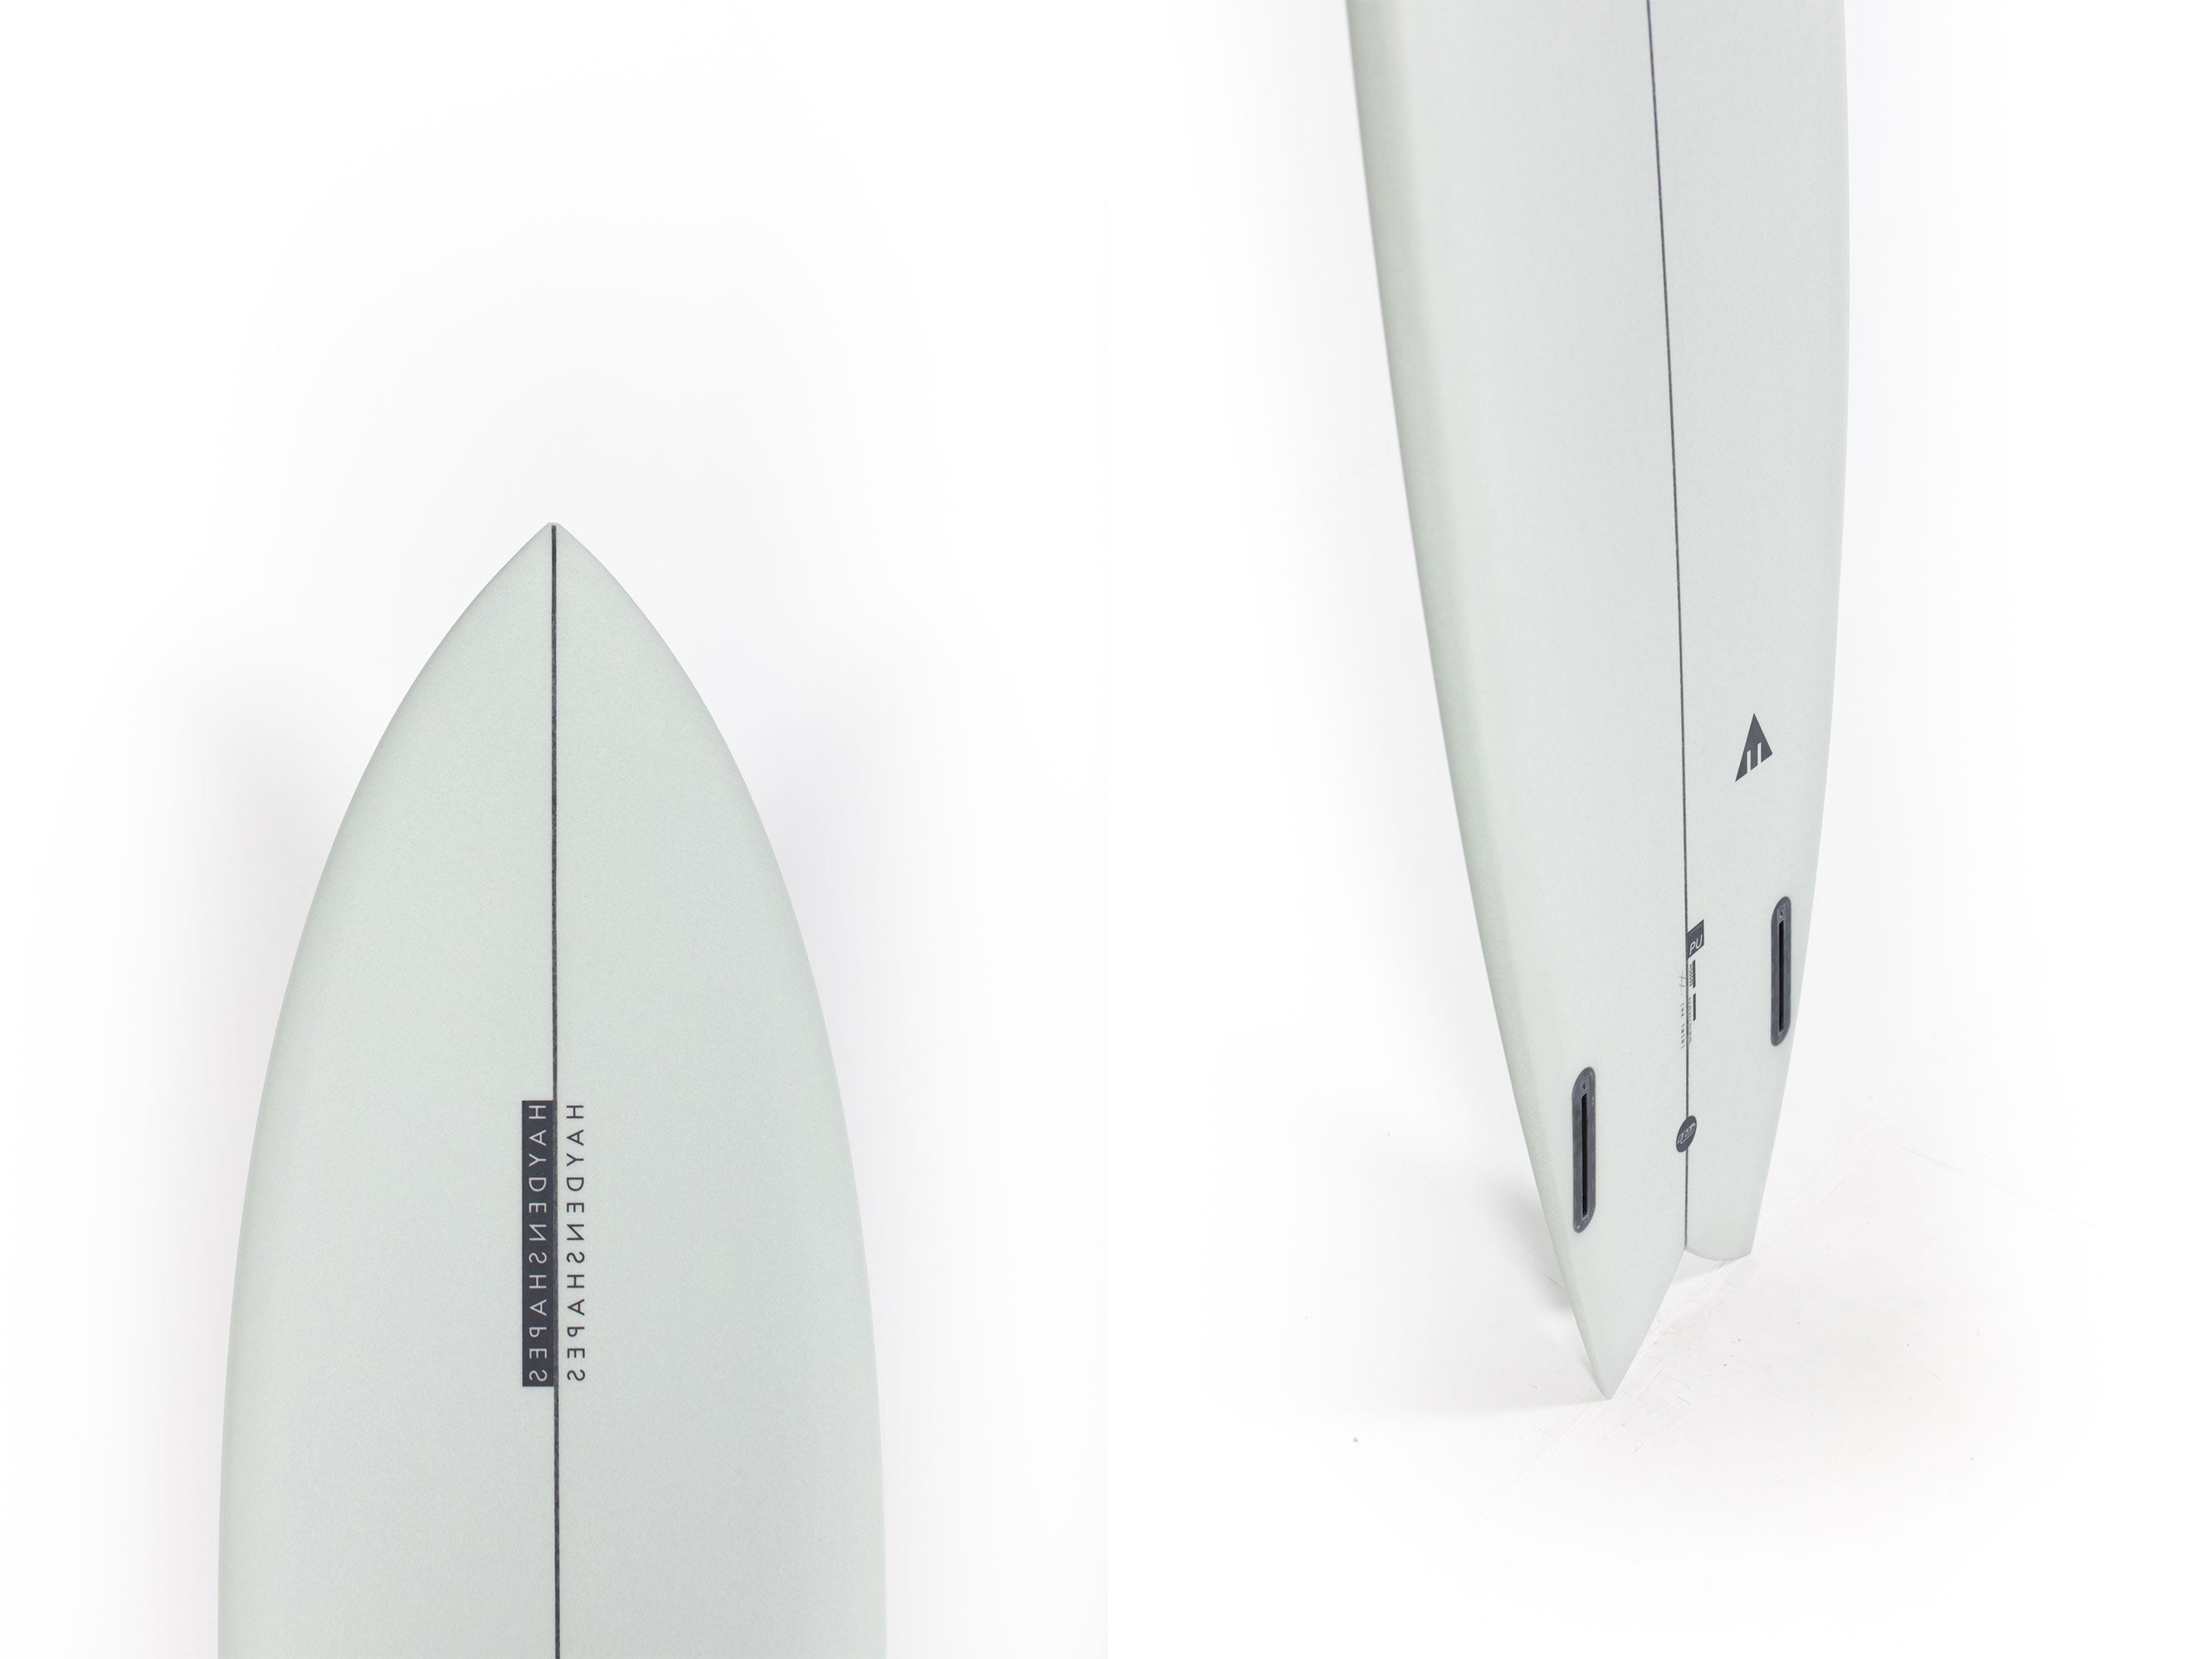 HaydenShapes Surfboard - HYPTO KRYPTO TWIN PU - 6'2" X 20 3/4" X 2 3/4" - 38.55L